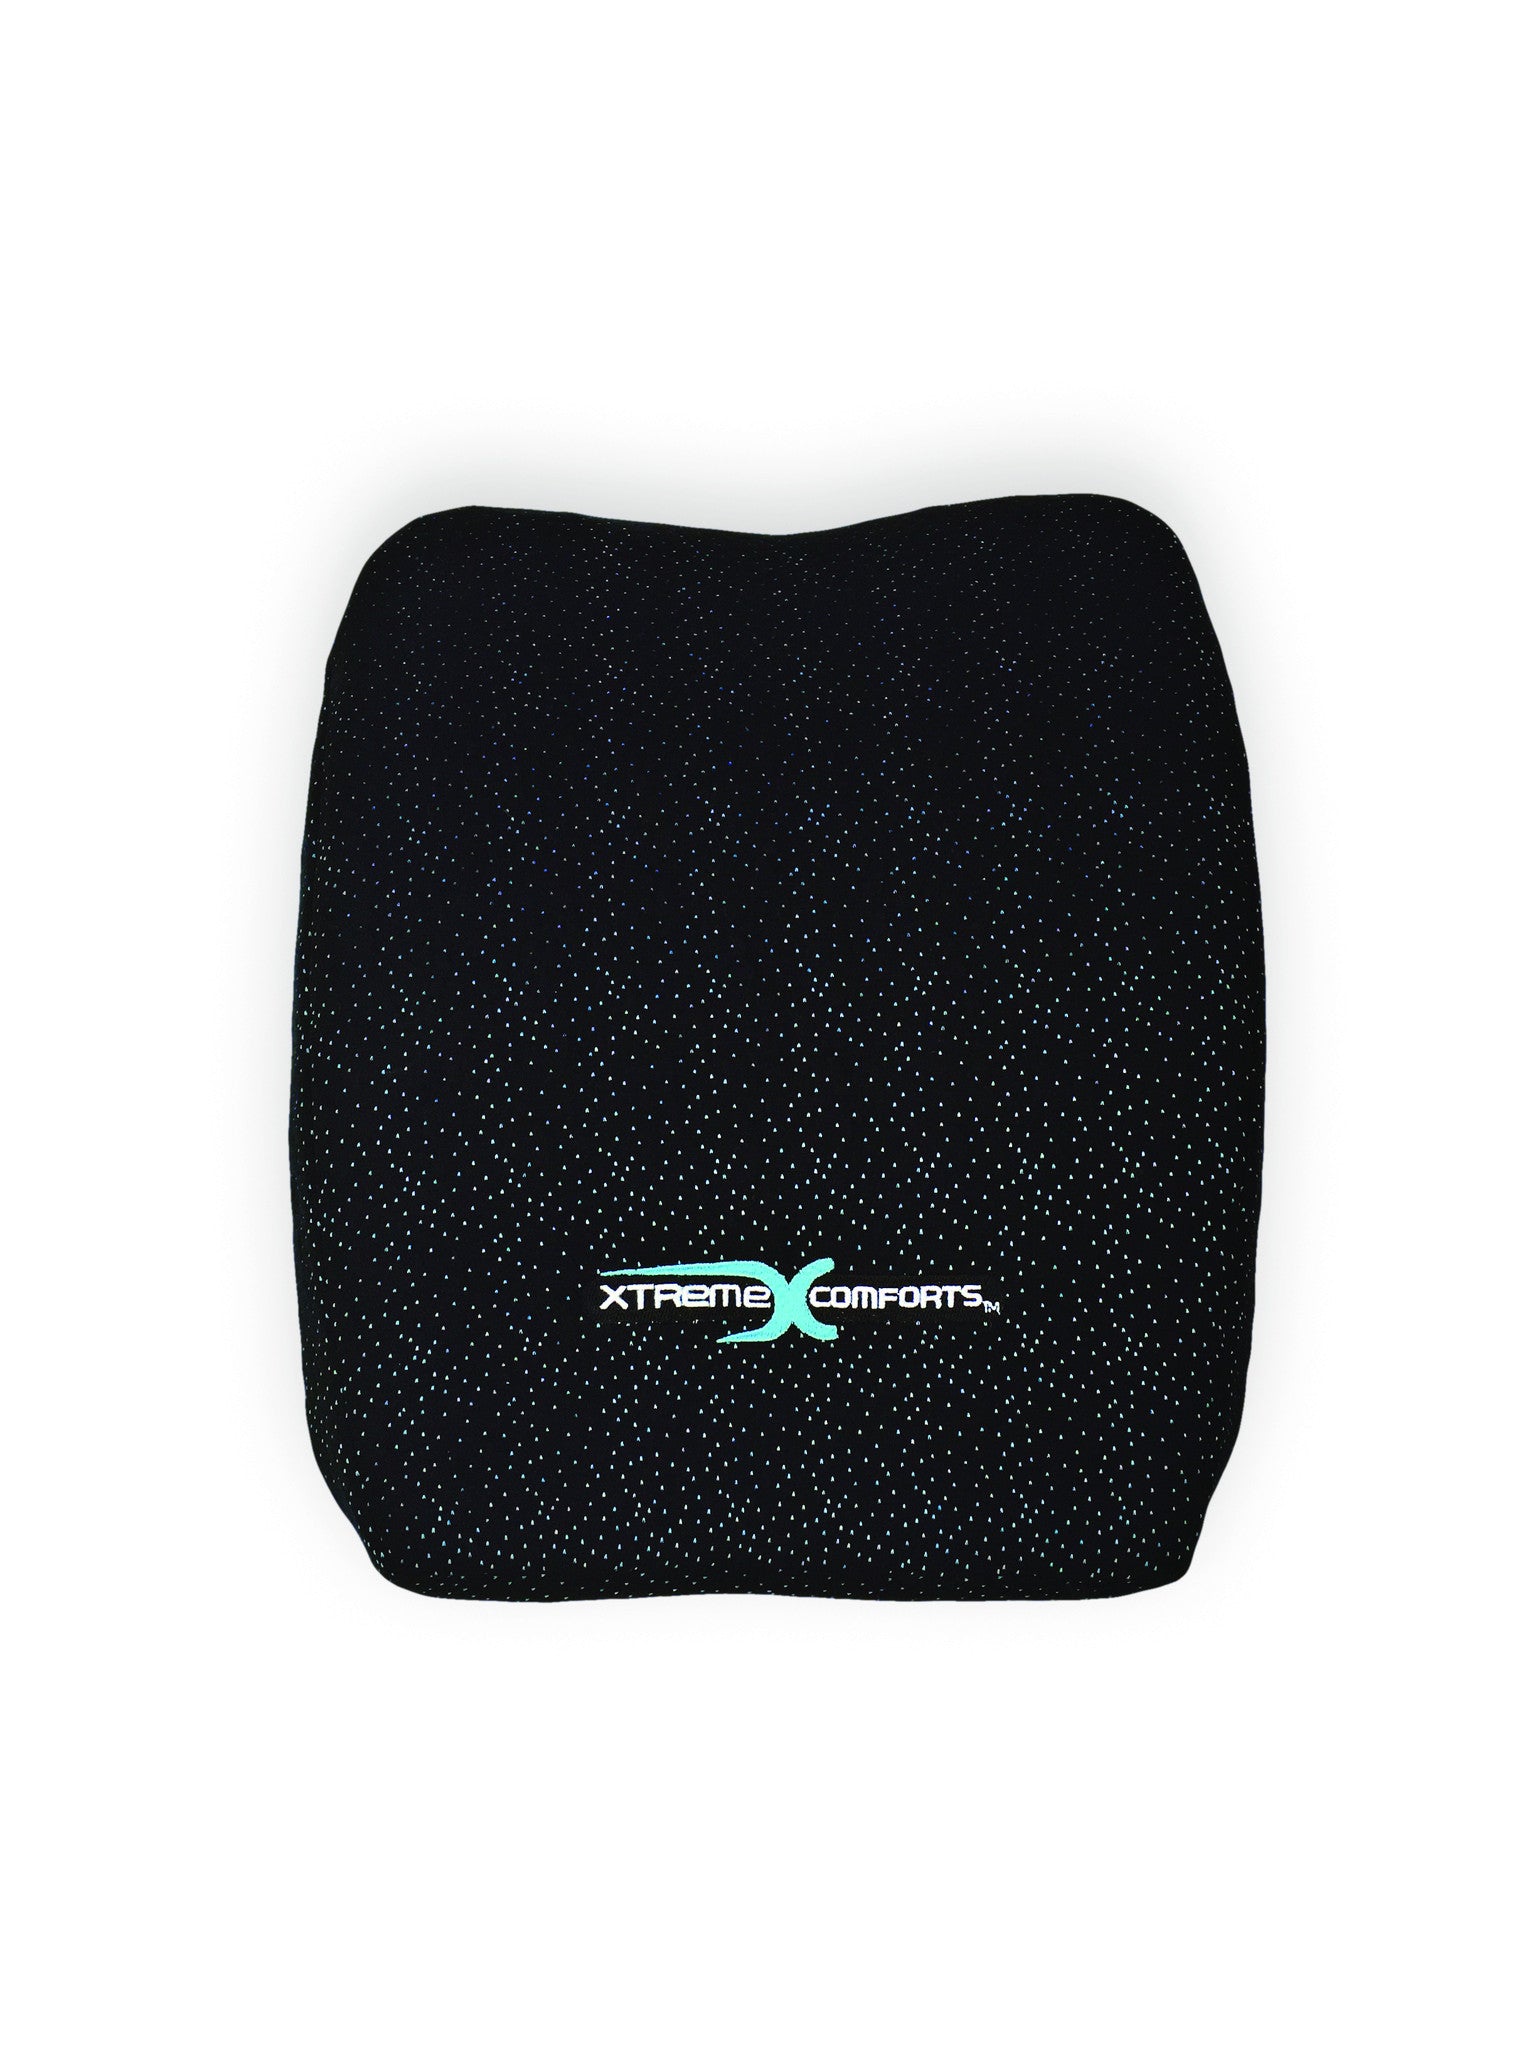 xtreme comforts back and lumbar cushion